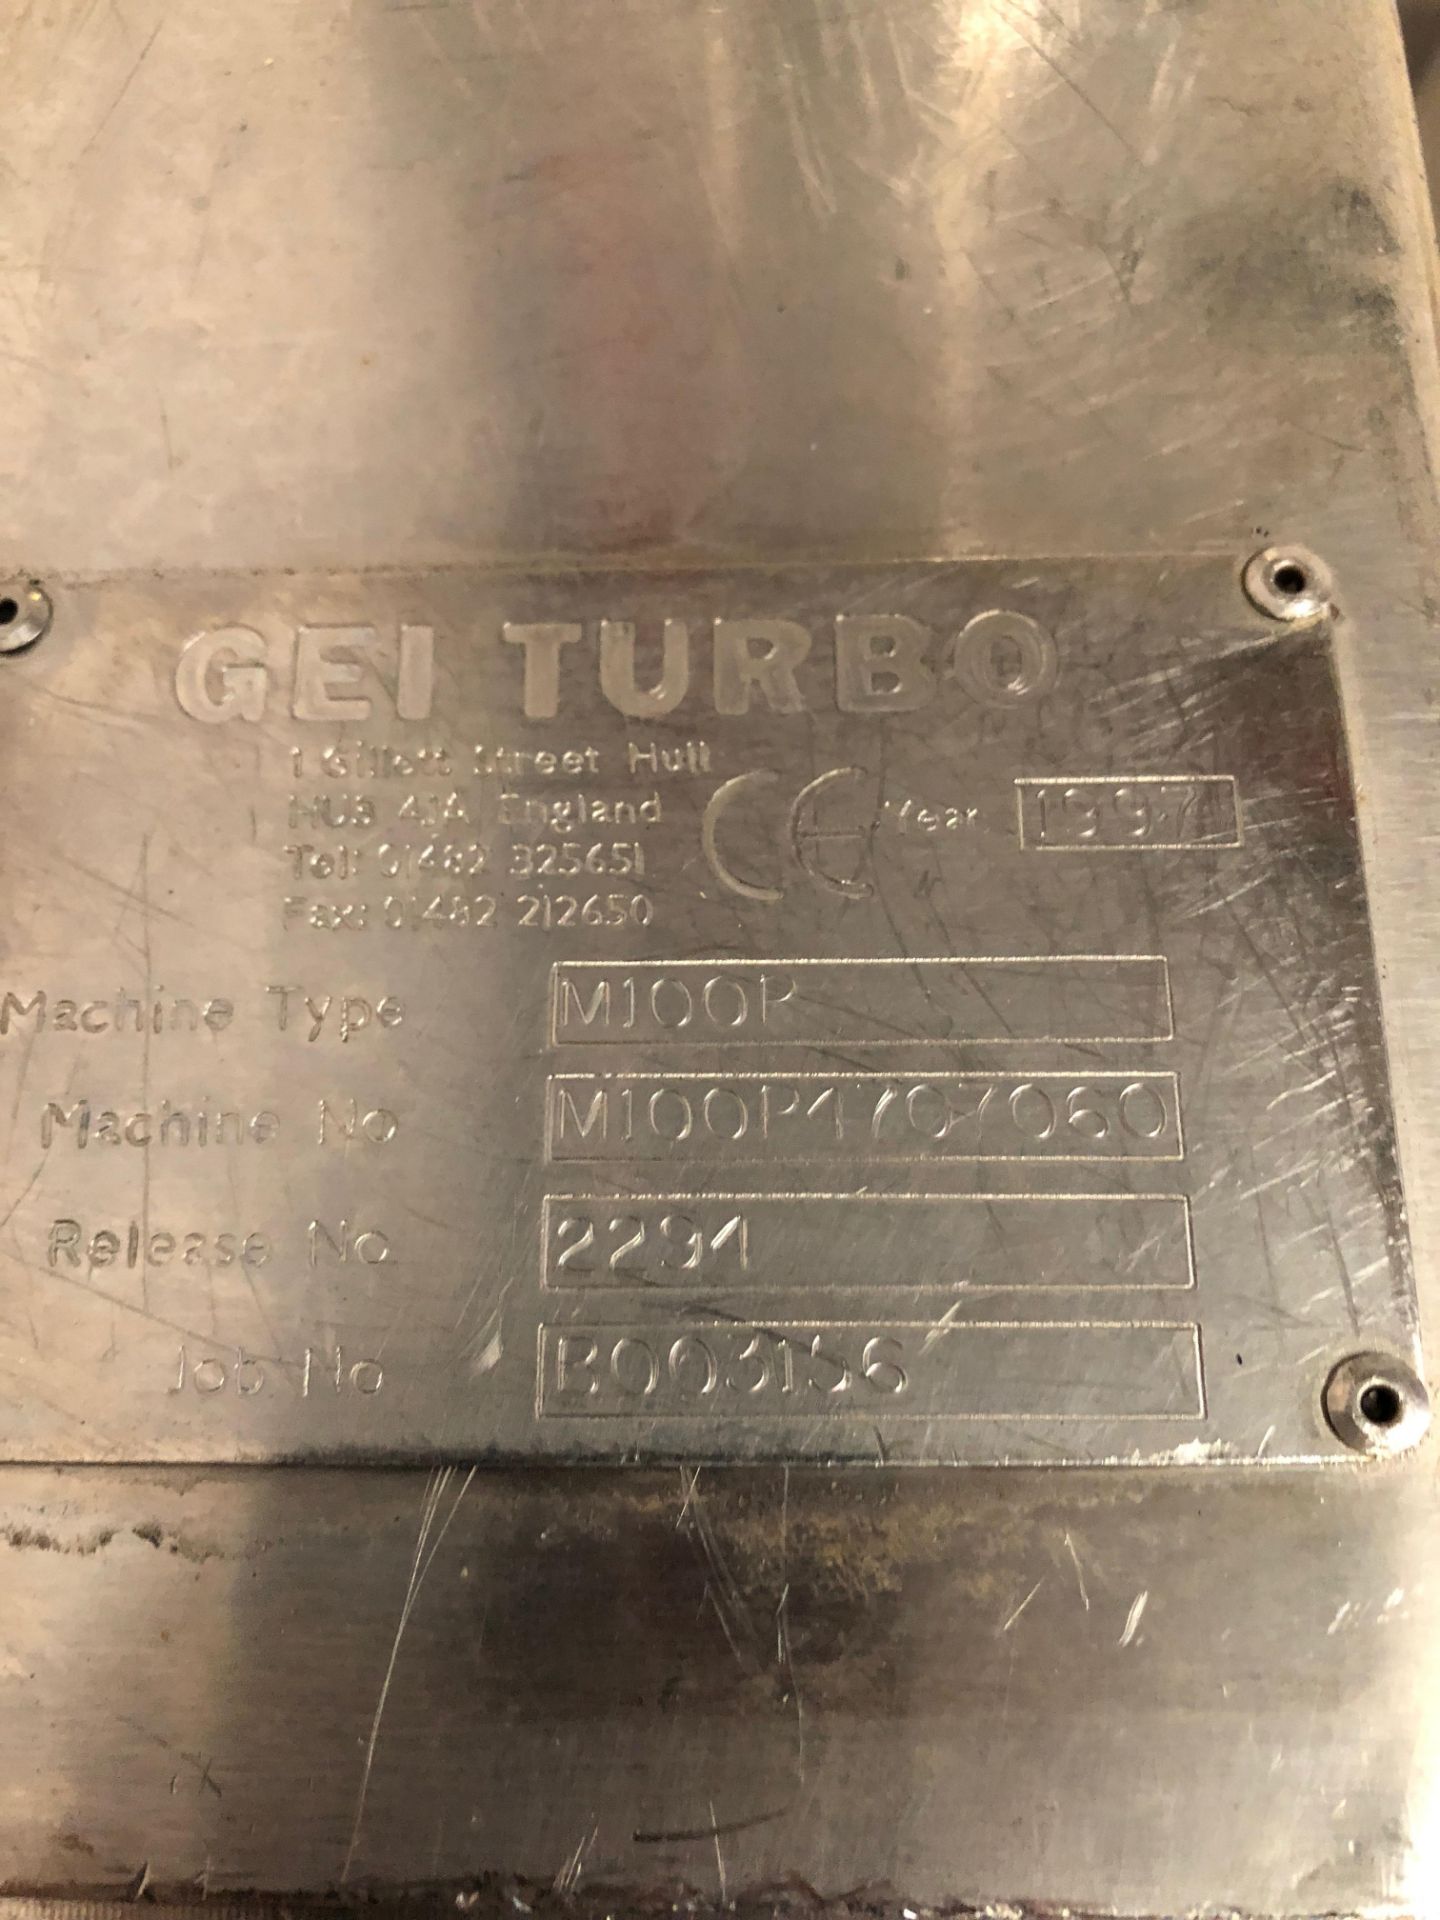 Turbo M100R depositor - Image 3 of 3